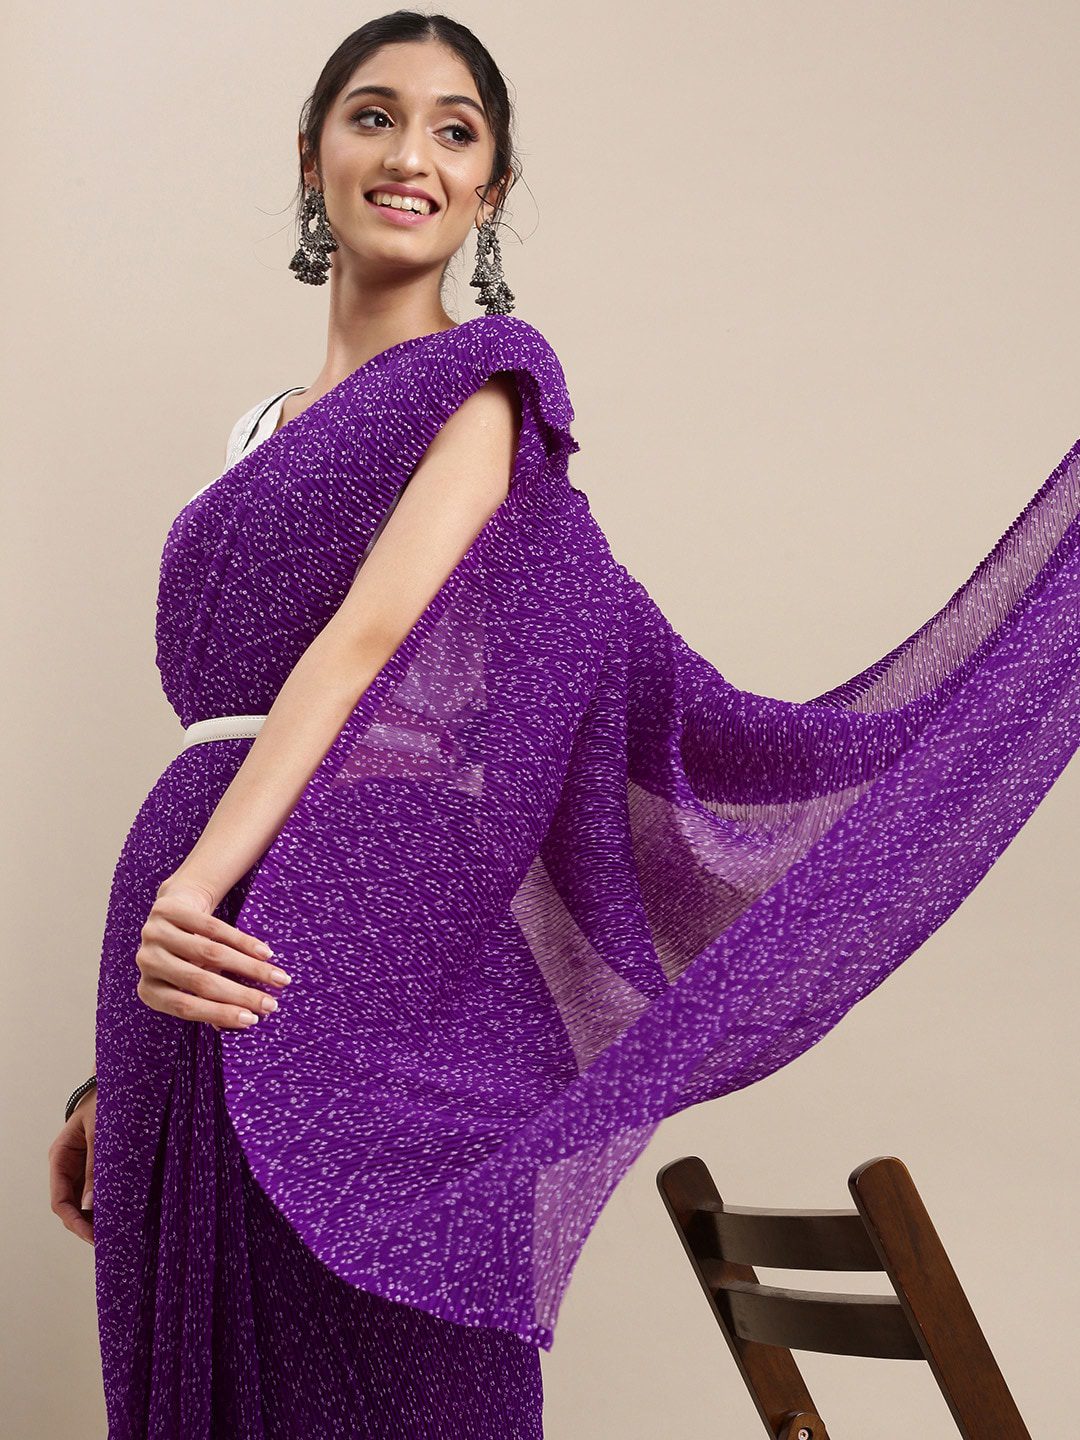 Georgette Bandhani saree Party Wear Indian Traditional Beautiful Sari  11-DNB2 | eBay